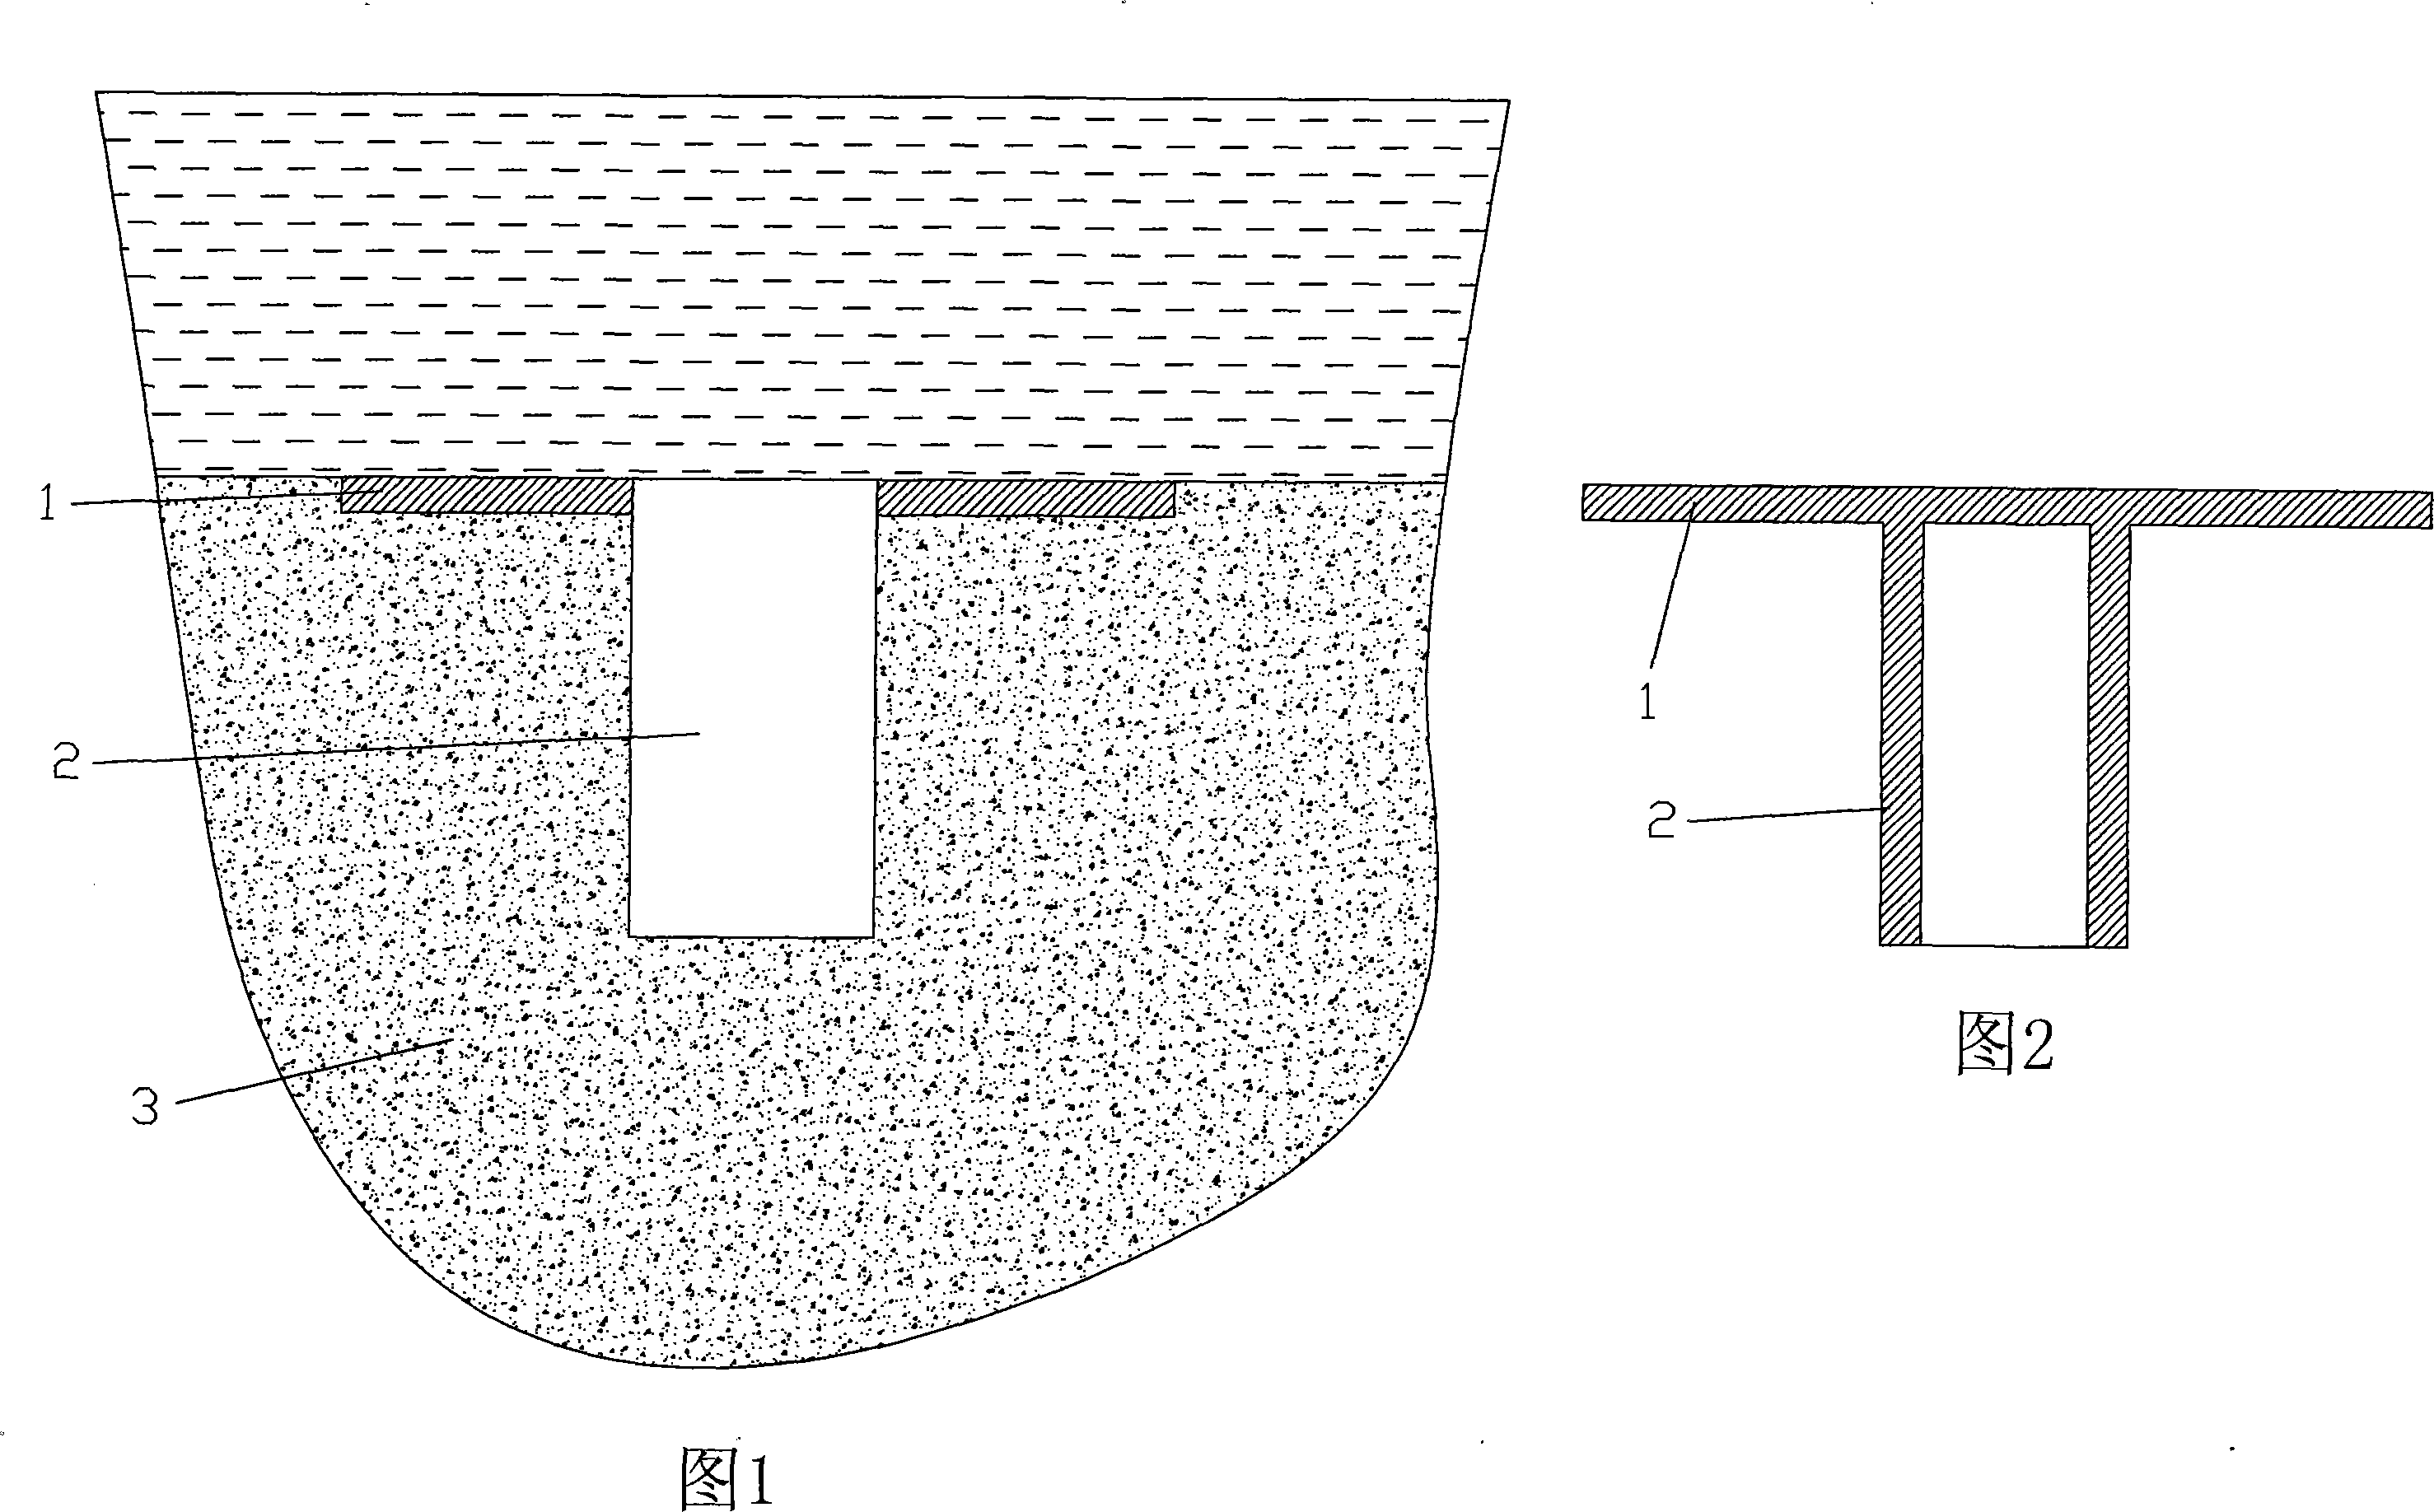 Suction type foundation used on sea-bottom